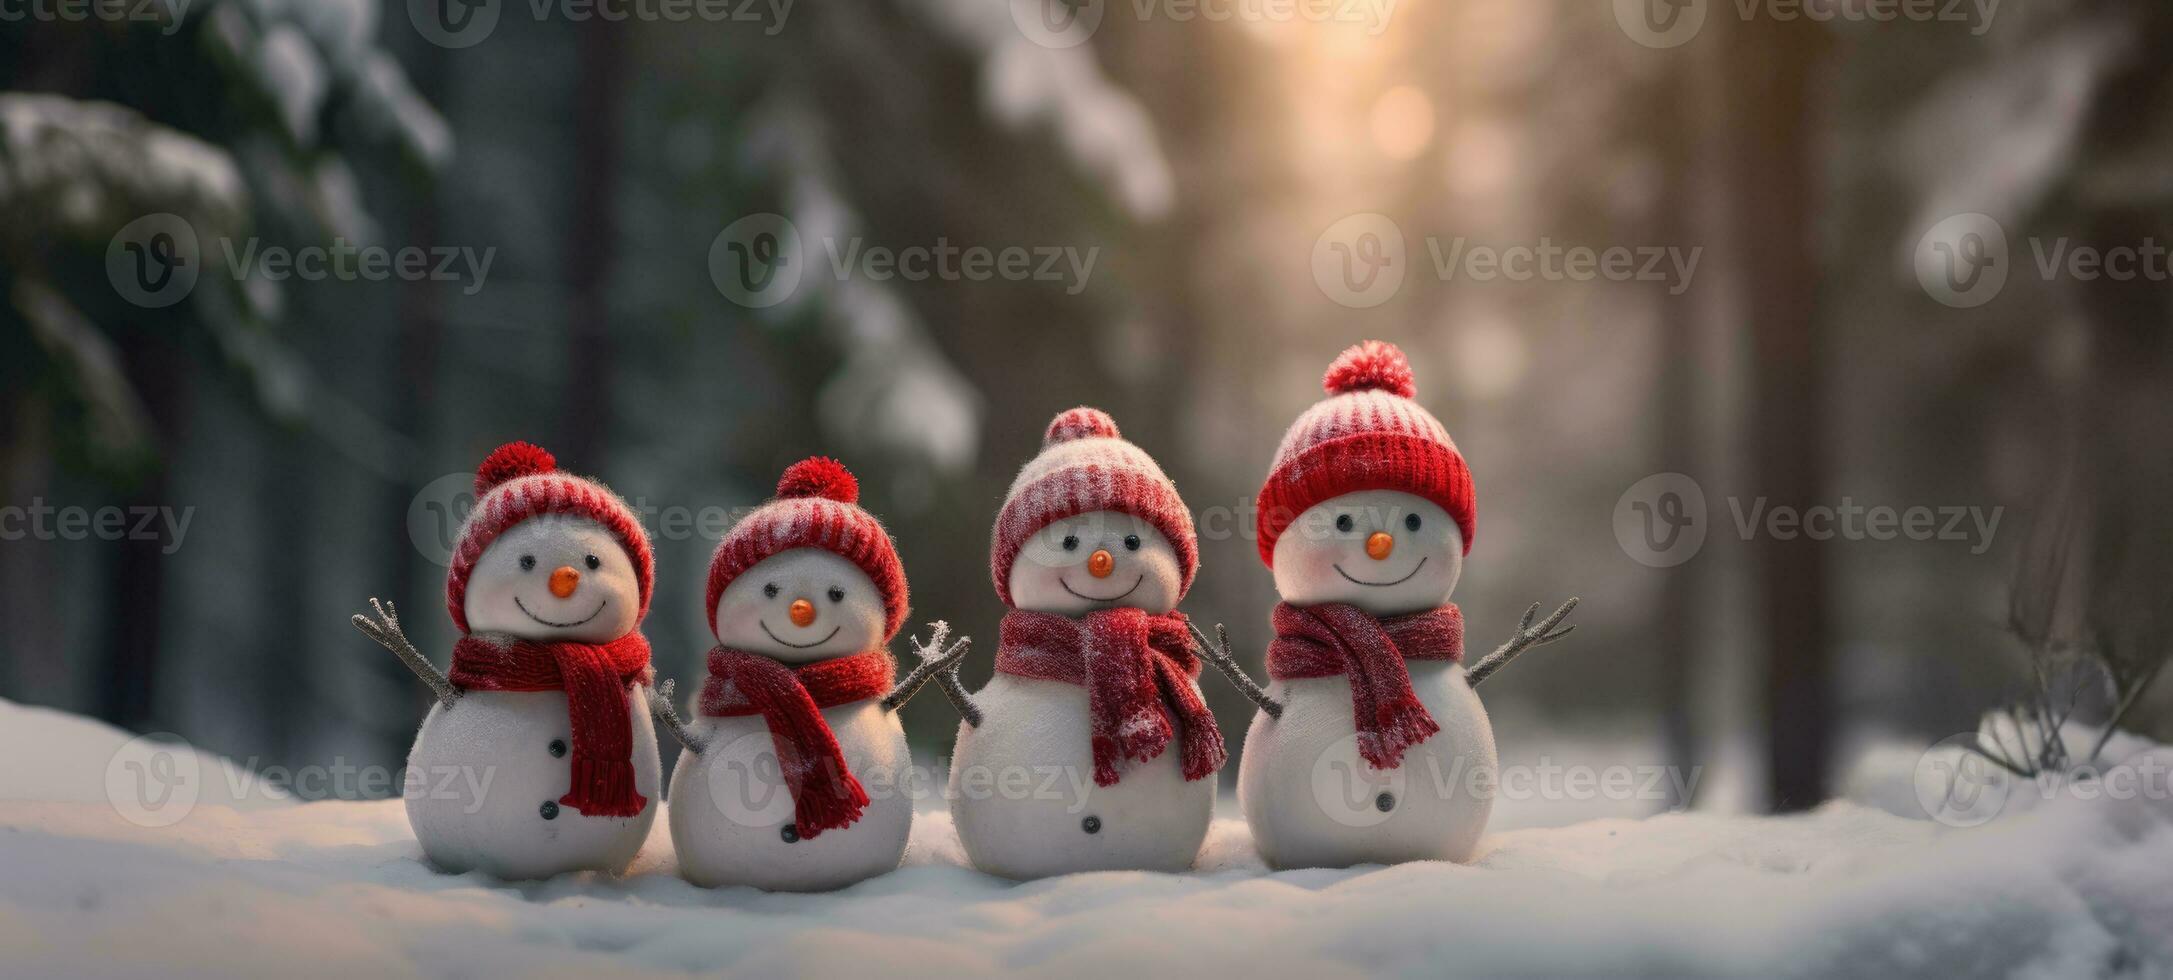 famille bonhomme de neige avec écharpe dans neige forêt salutation carte Noël Noël photo